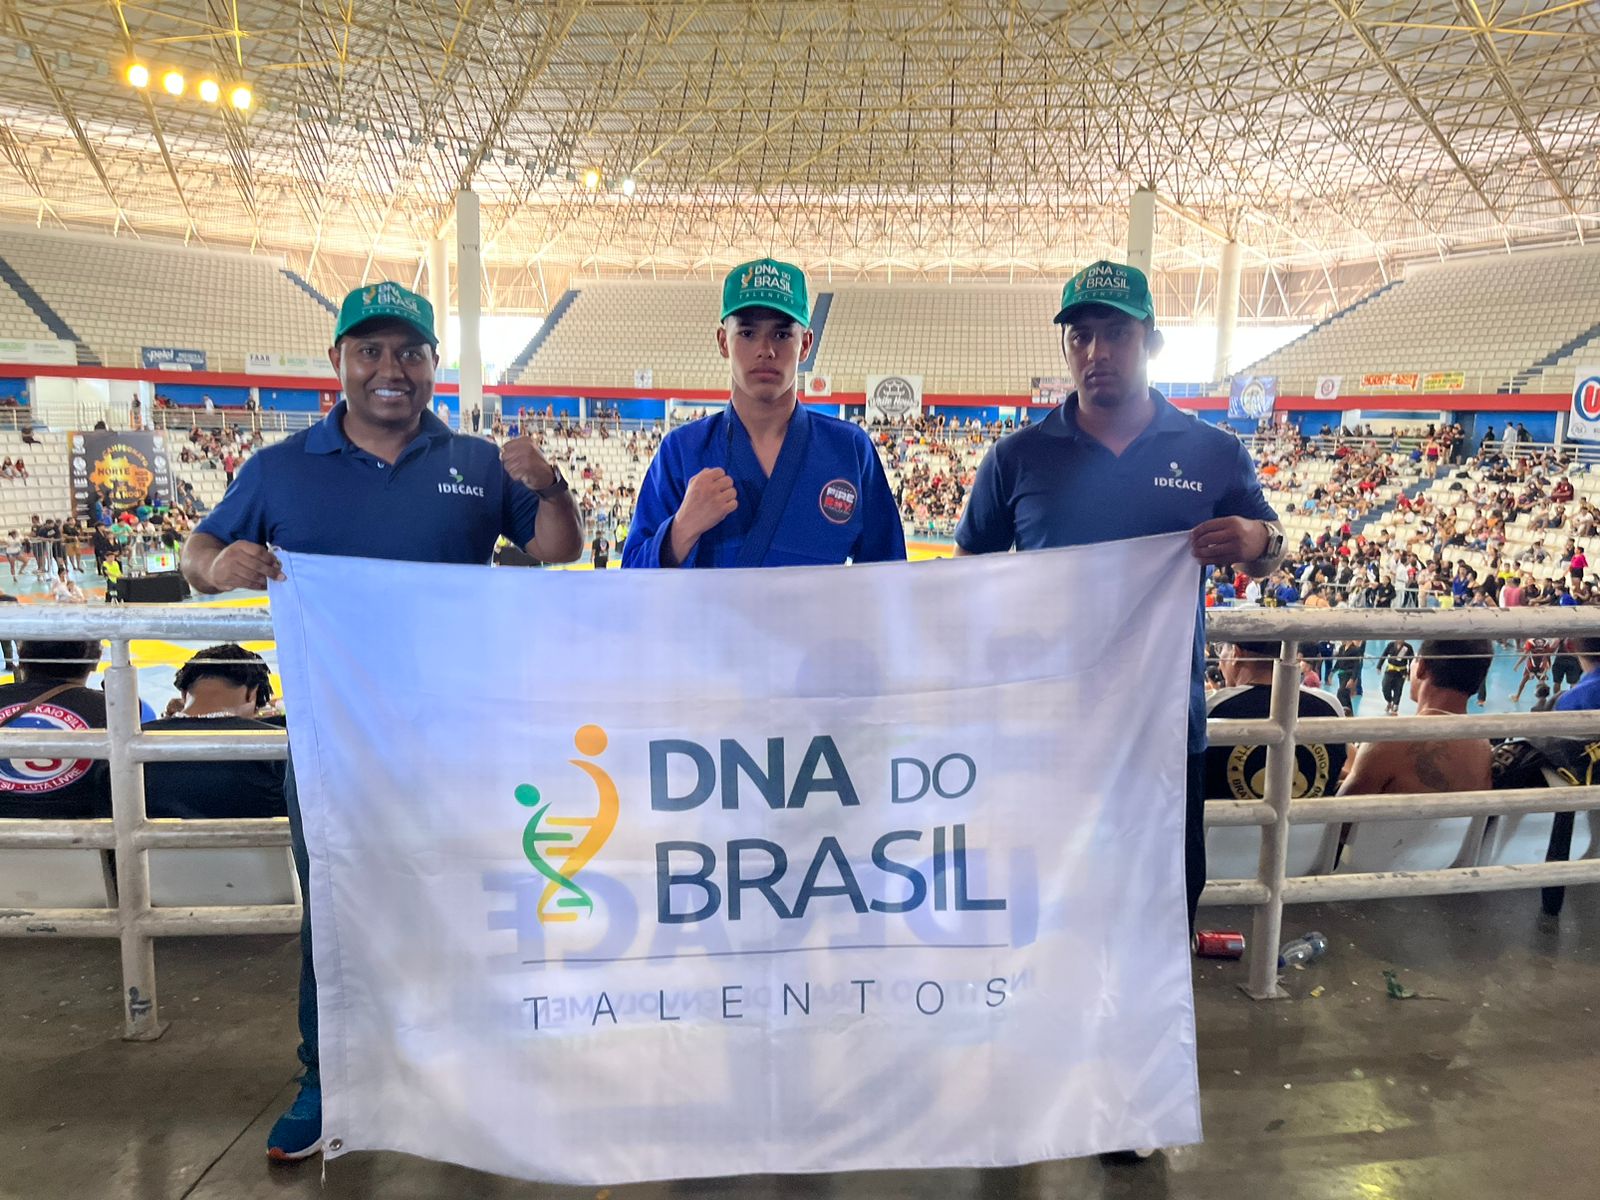 DNA Brasil athlete wins two medals at the Jiu-Jitsu championship in Manaus